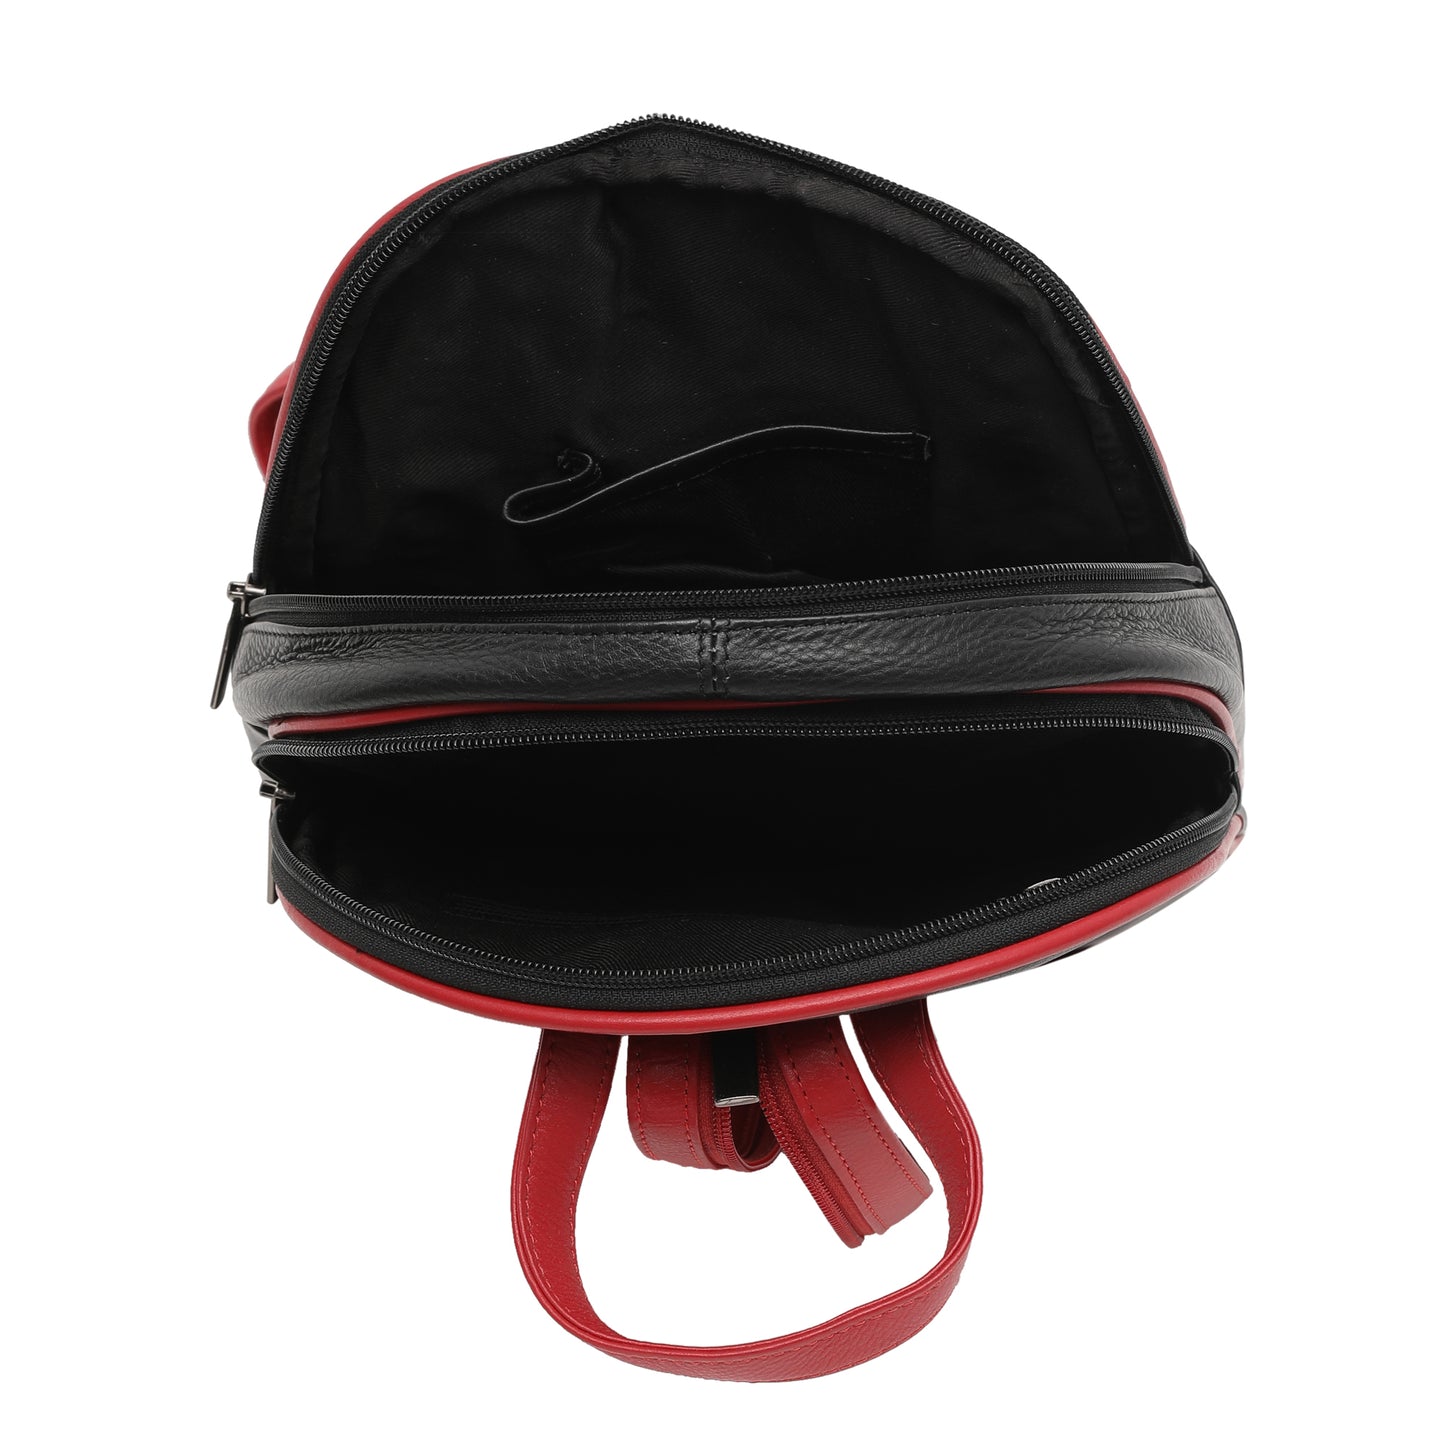 Calfnero Genuine Leather Women's Backpack (19507-Black-Red)